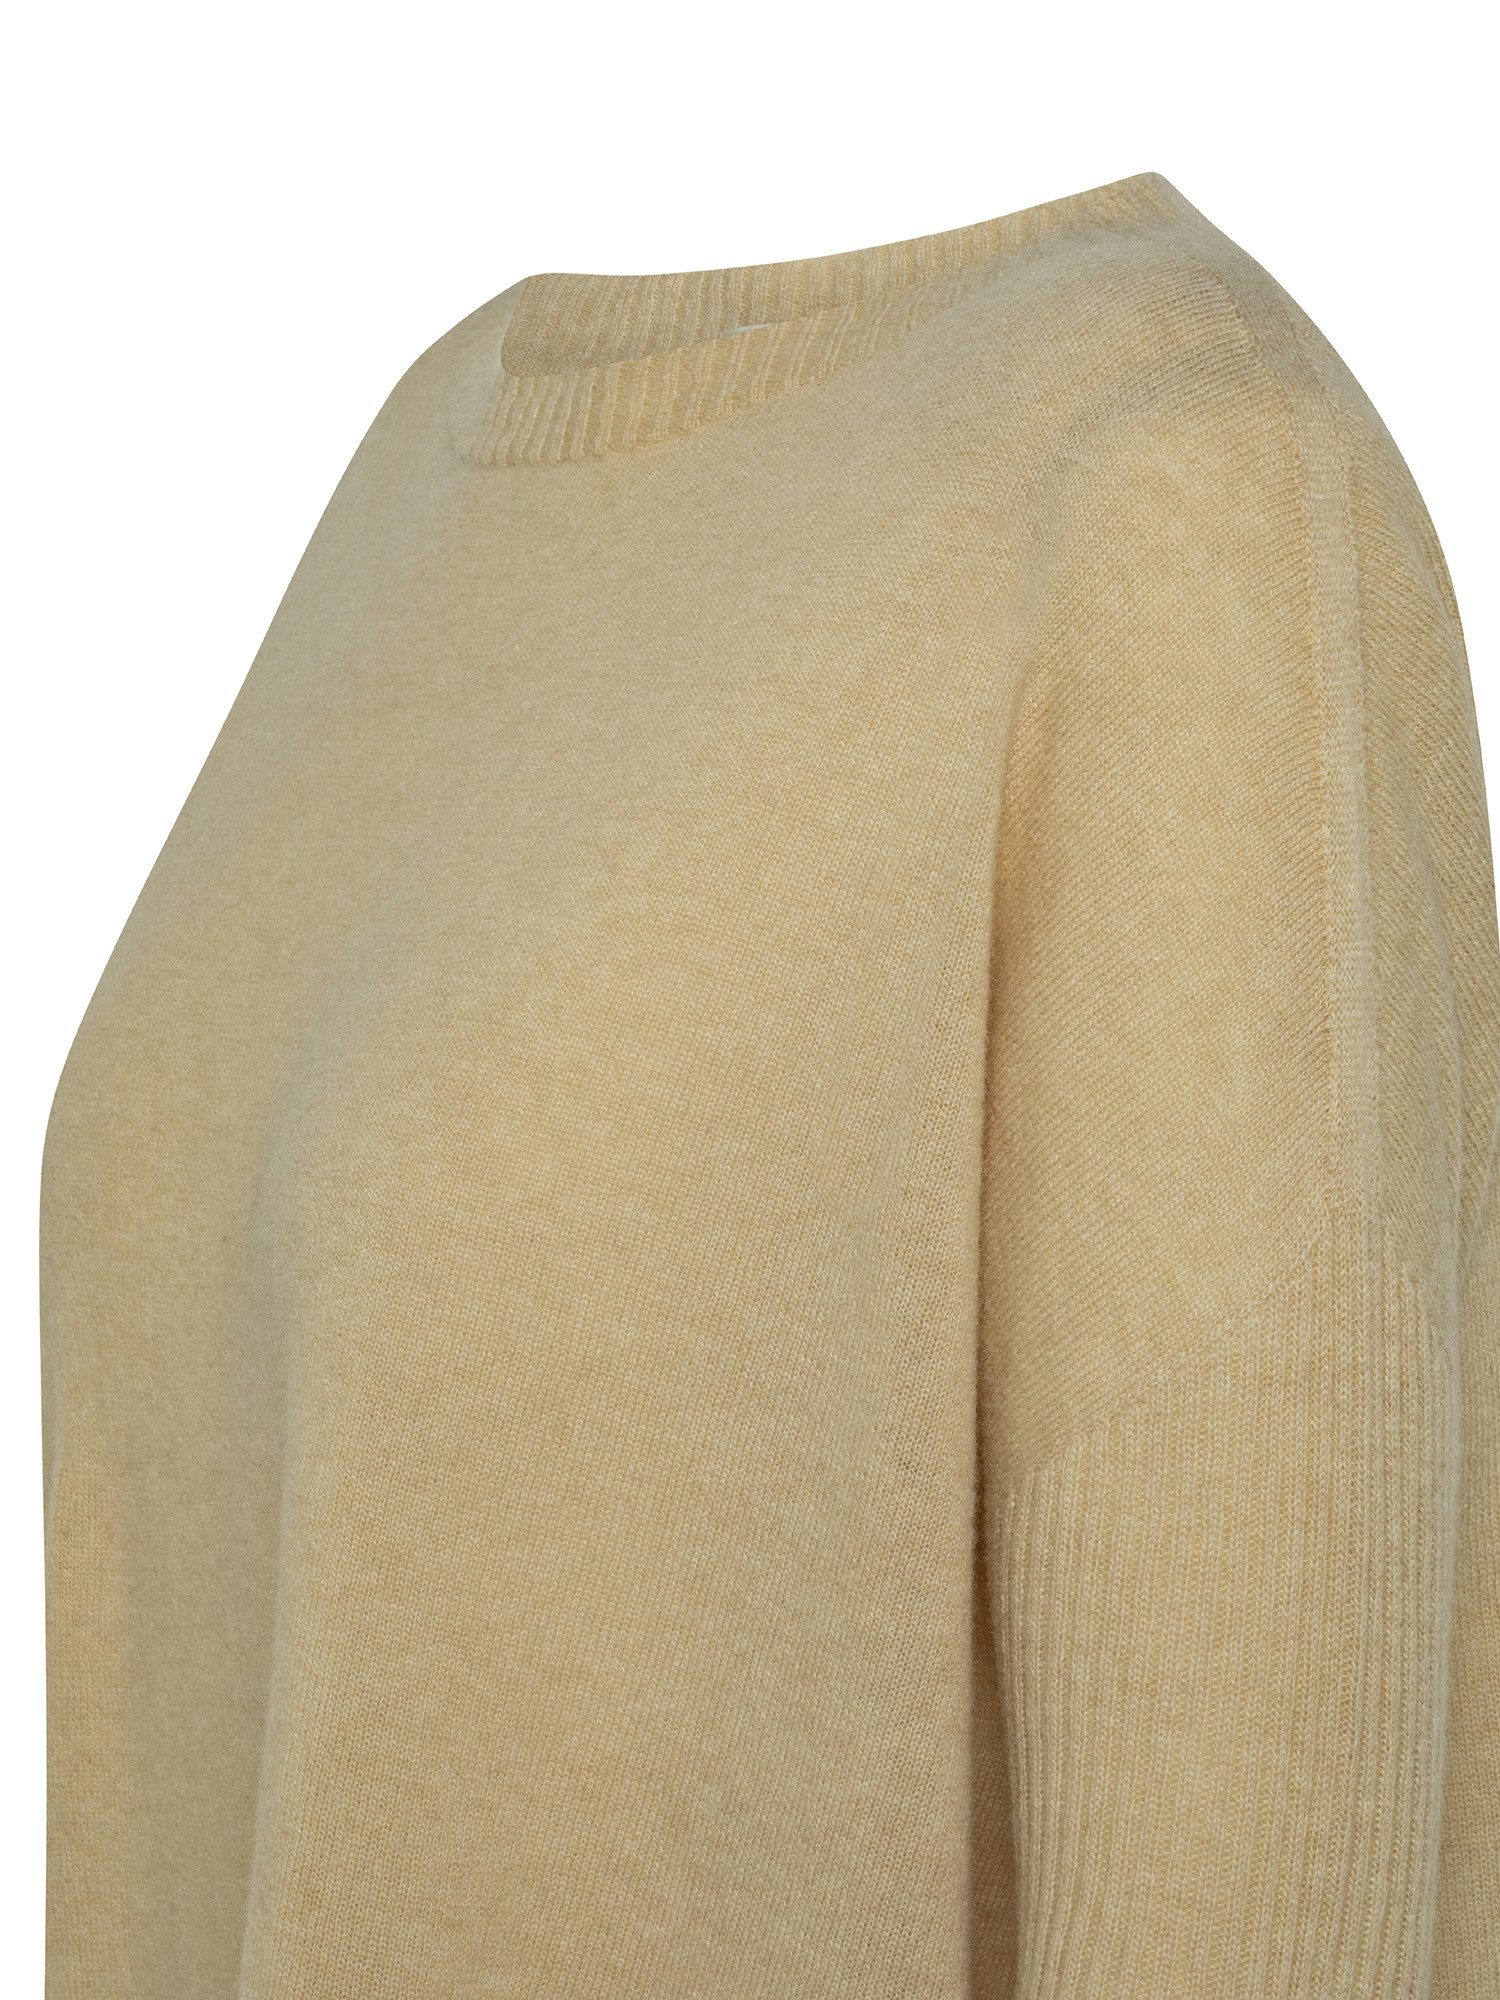 K Collection - Crewneck sweater, Beige, large image number 2